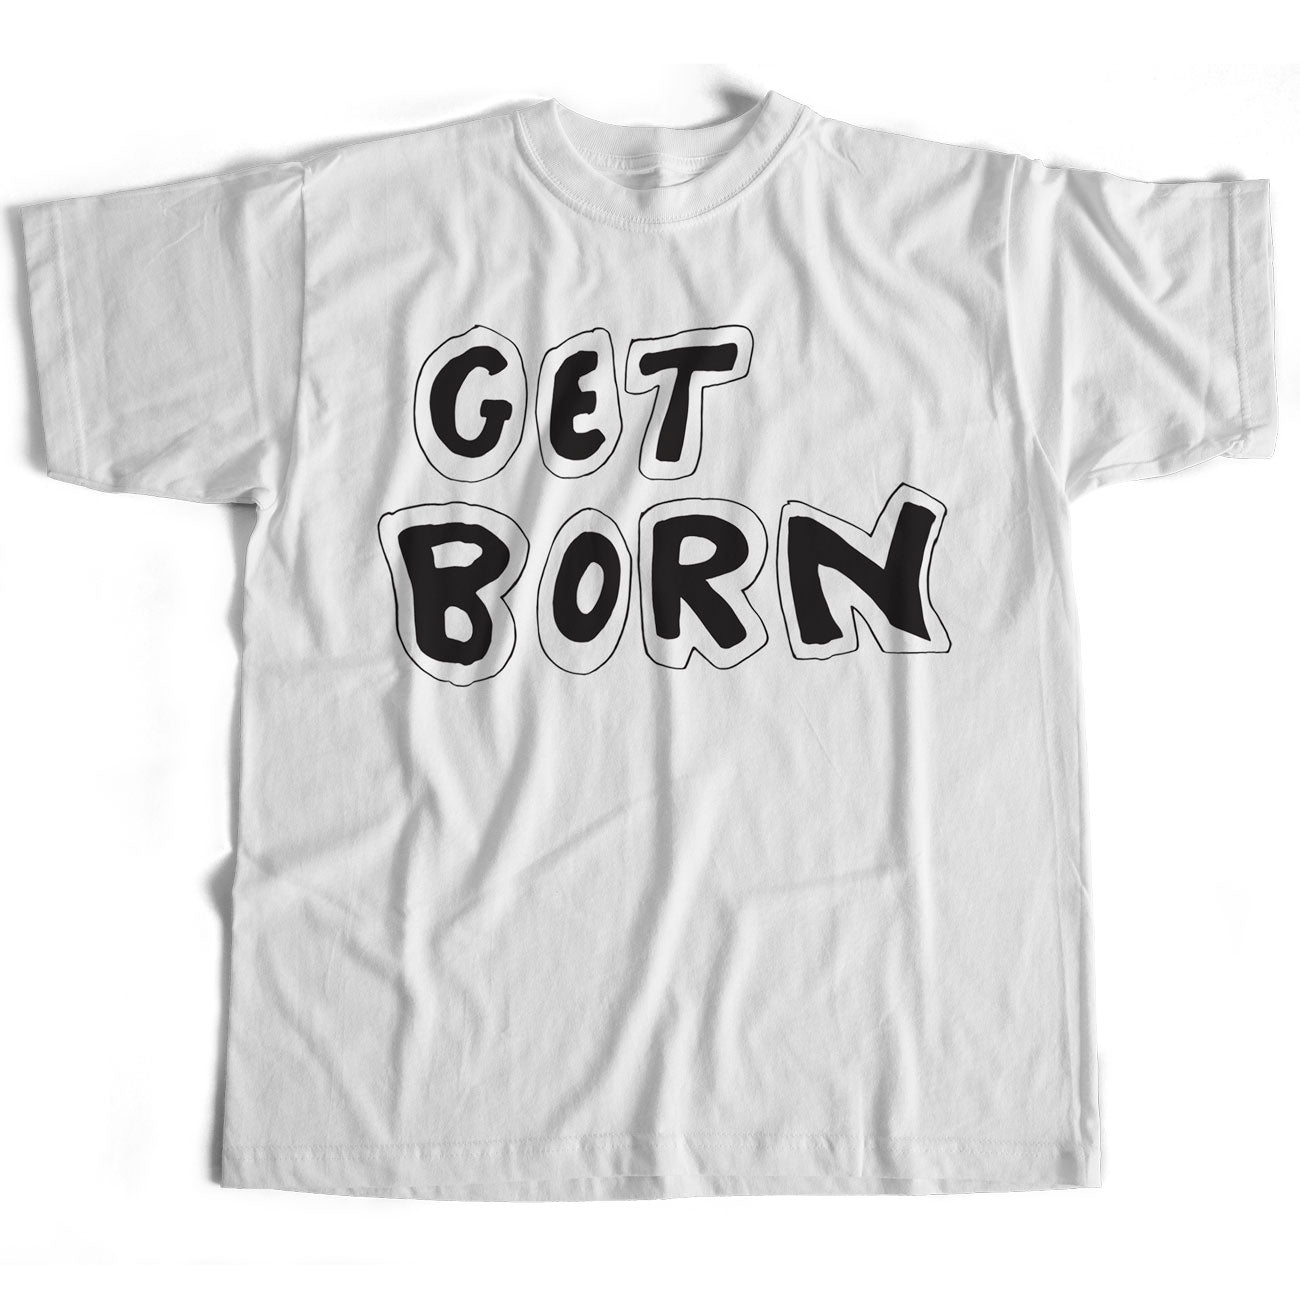 Inspired by Bob Dylan T Shirt - Get Born Subterranean Homesick Blues Card Old Skool Hooligans